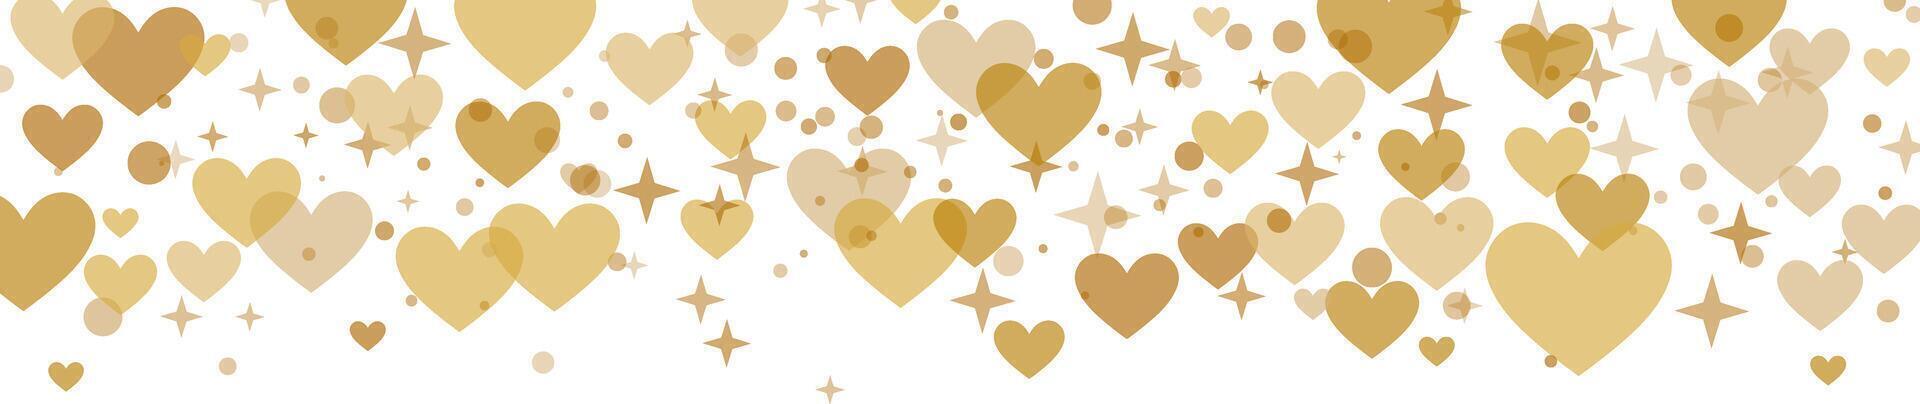 Gold heart confetti with stars, elegant valentine day celebration border, festive clip art element design vector